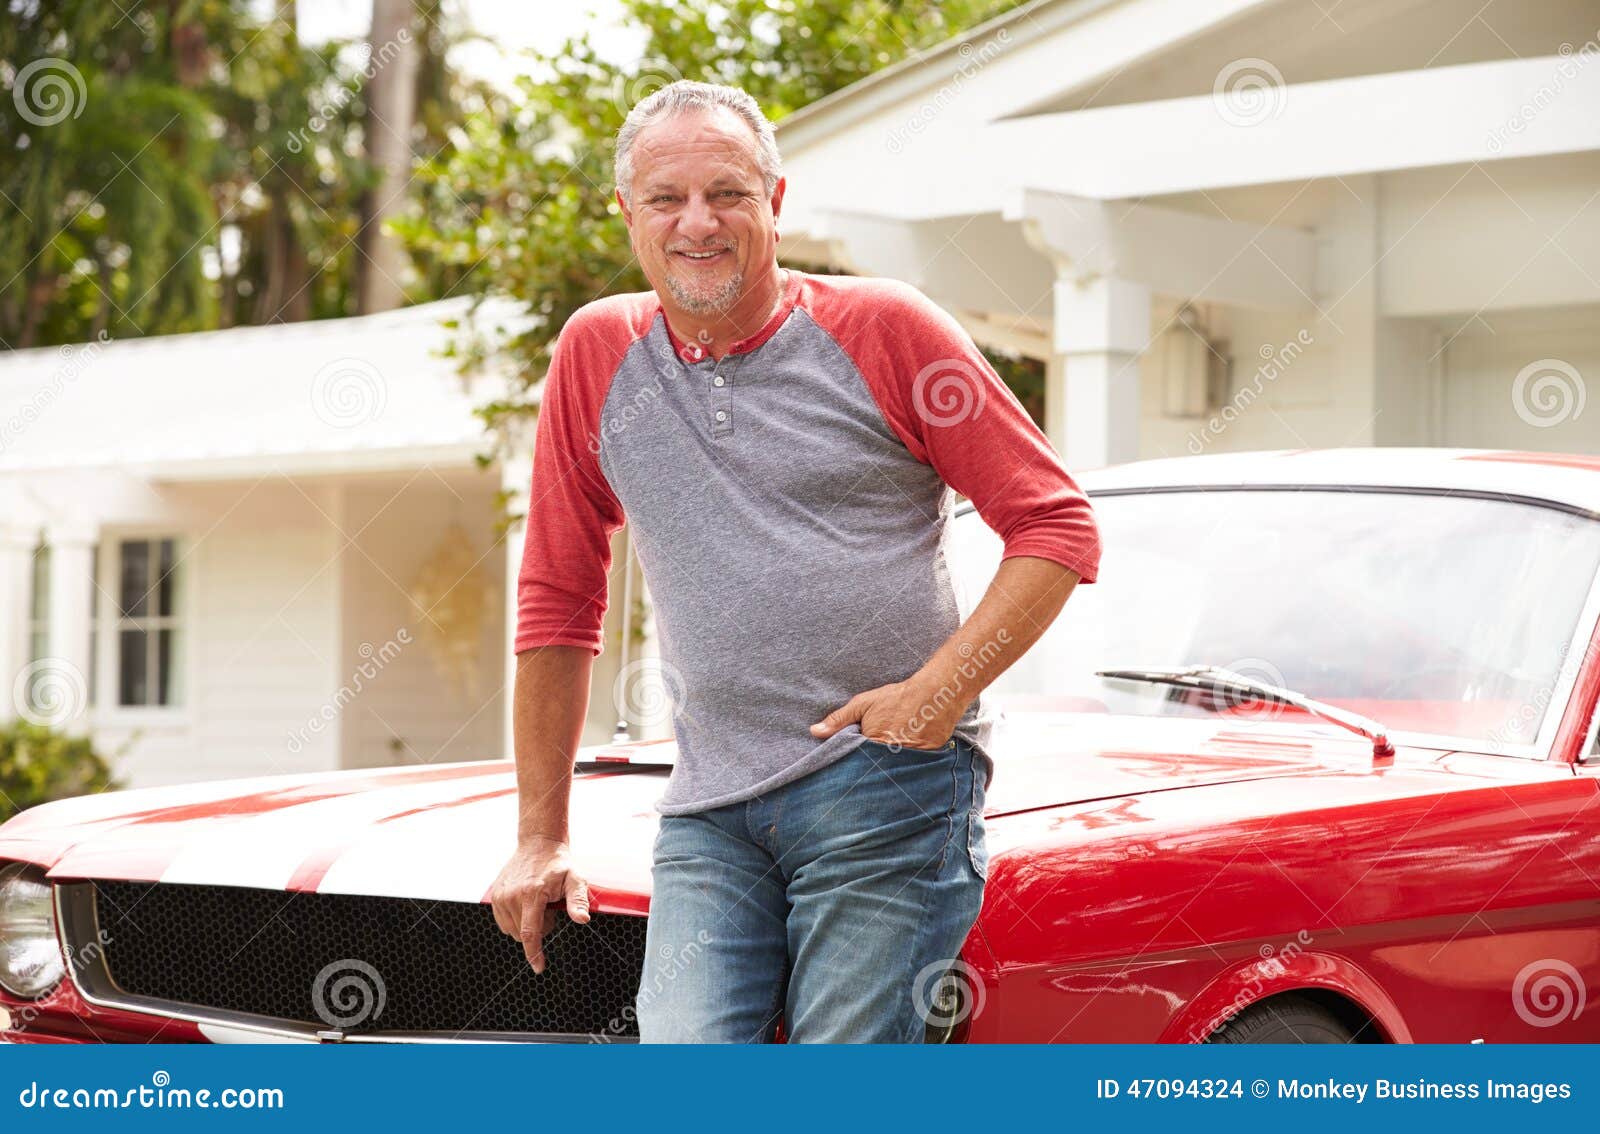 retired senior man standing next to restored classic car